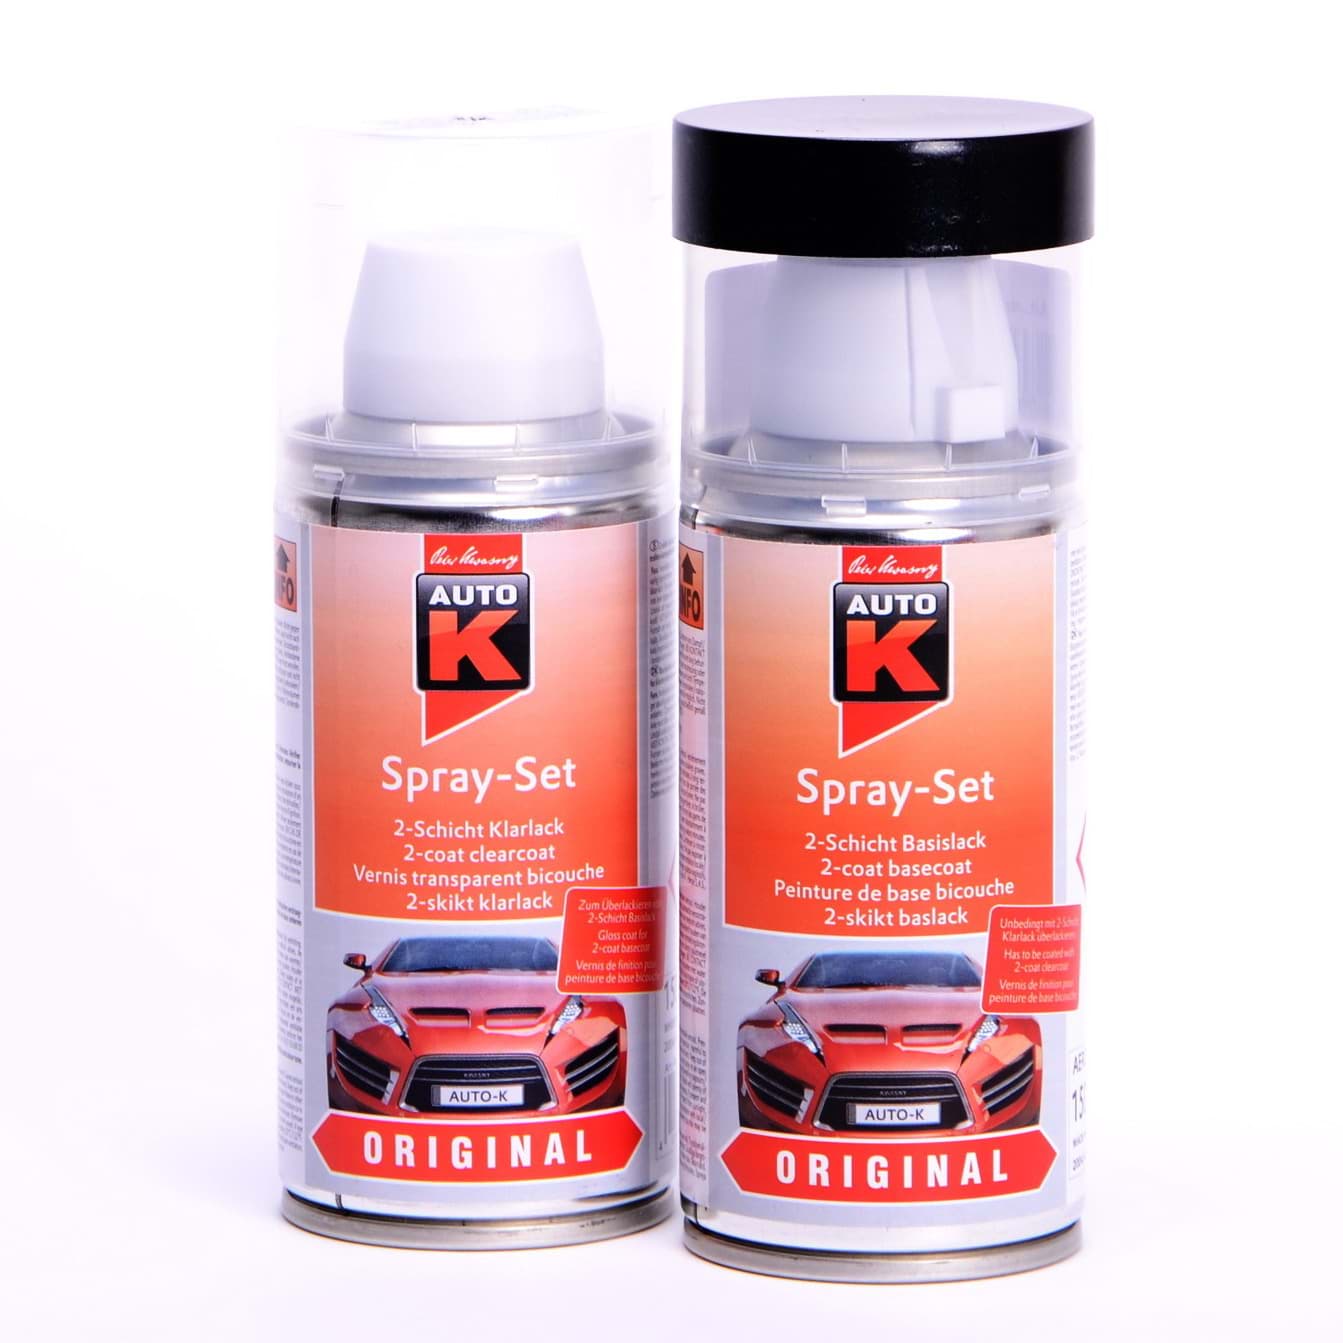 Auto-K Spray-Set Autolack für Opel 151 Mirage met 21463 resmi